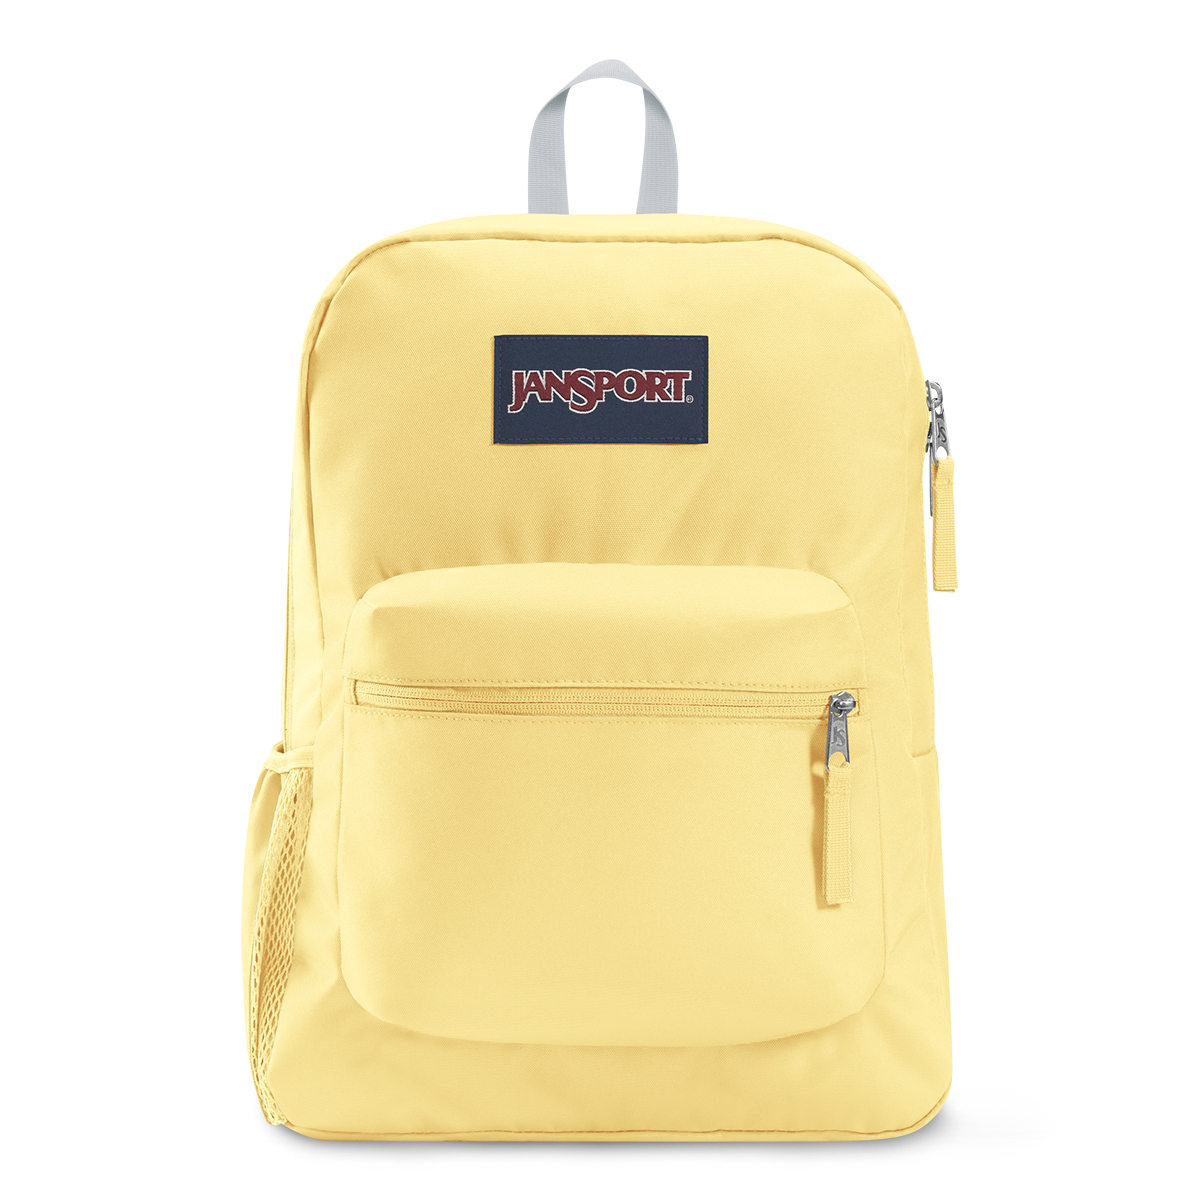 JanSport(R) Cross Town Backpack - Pale Banana